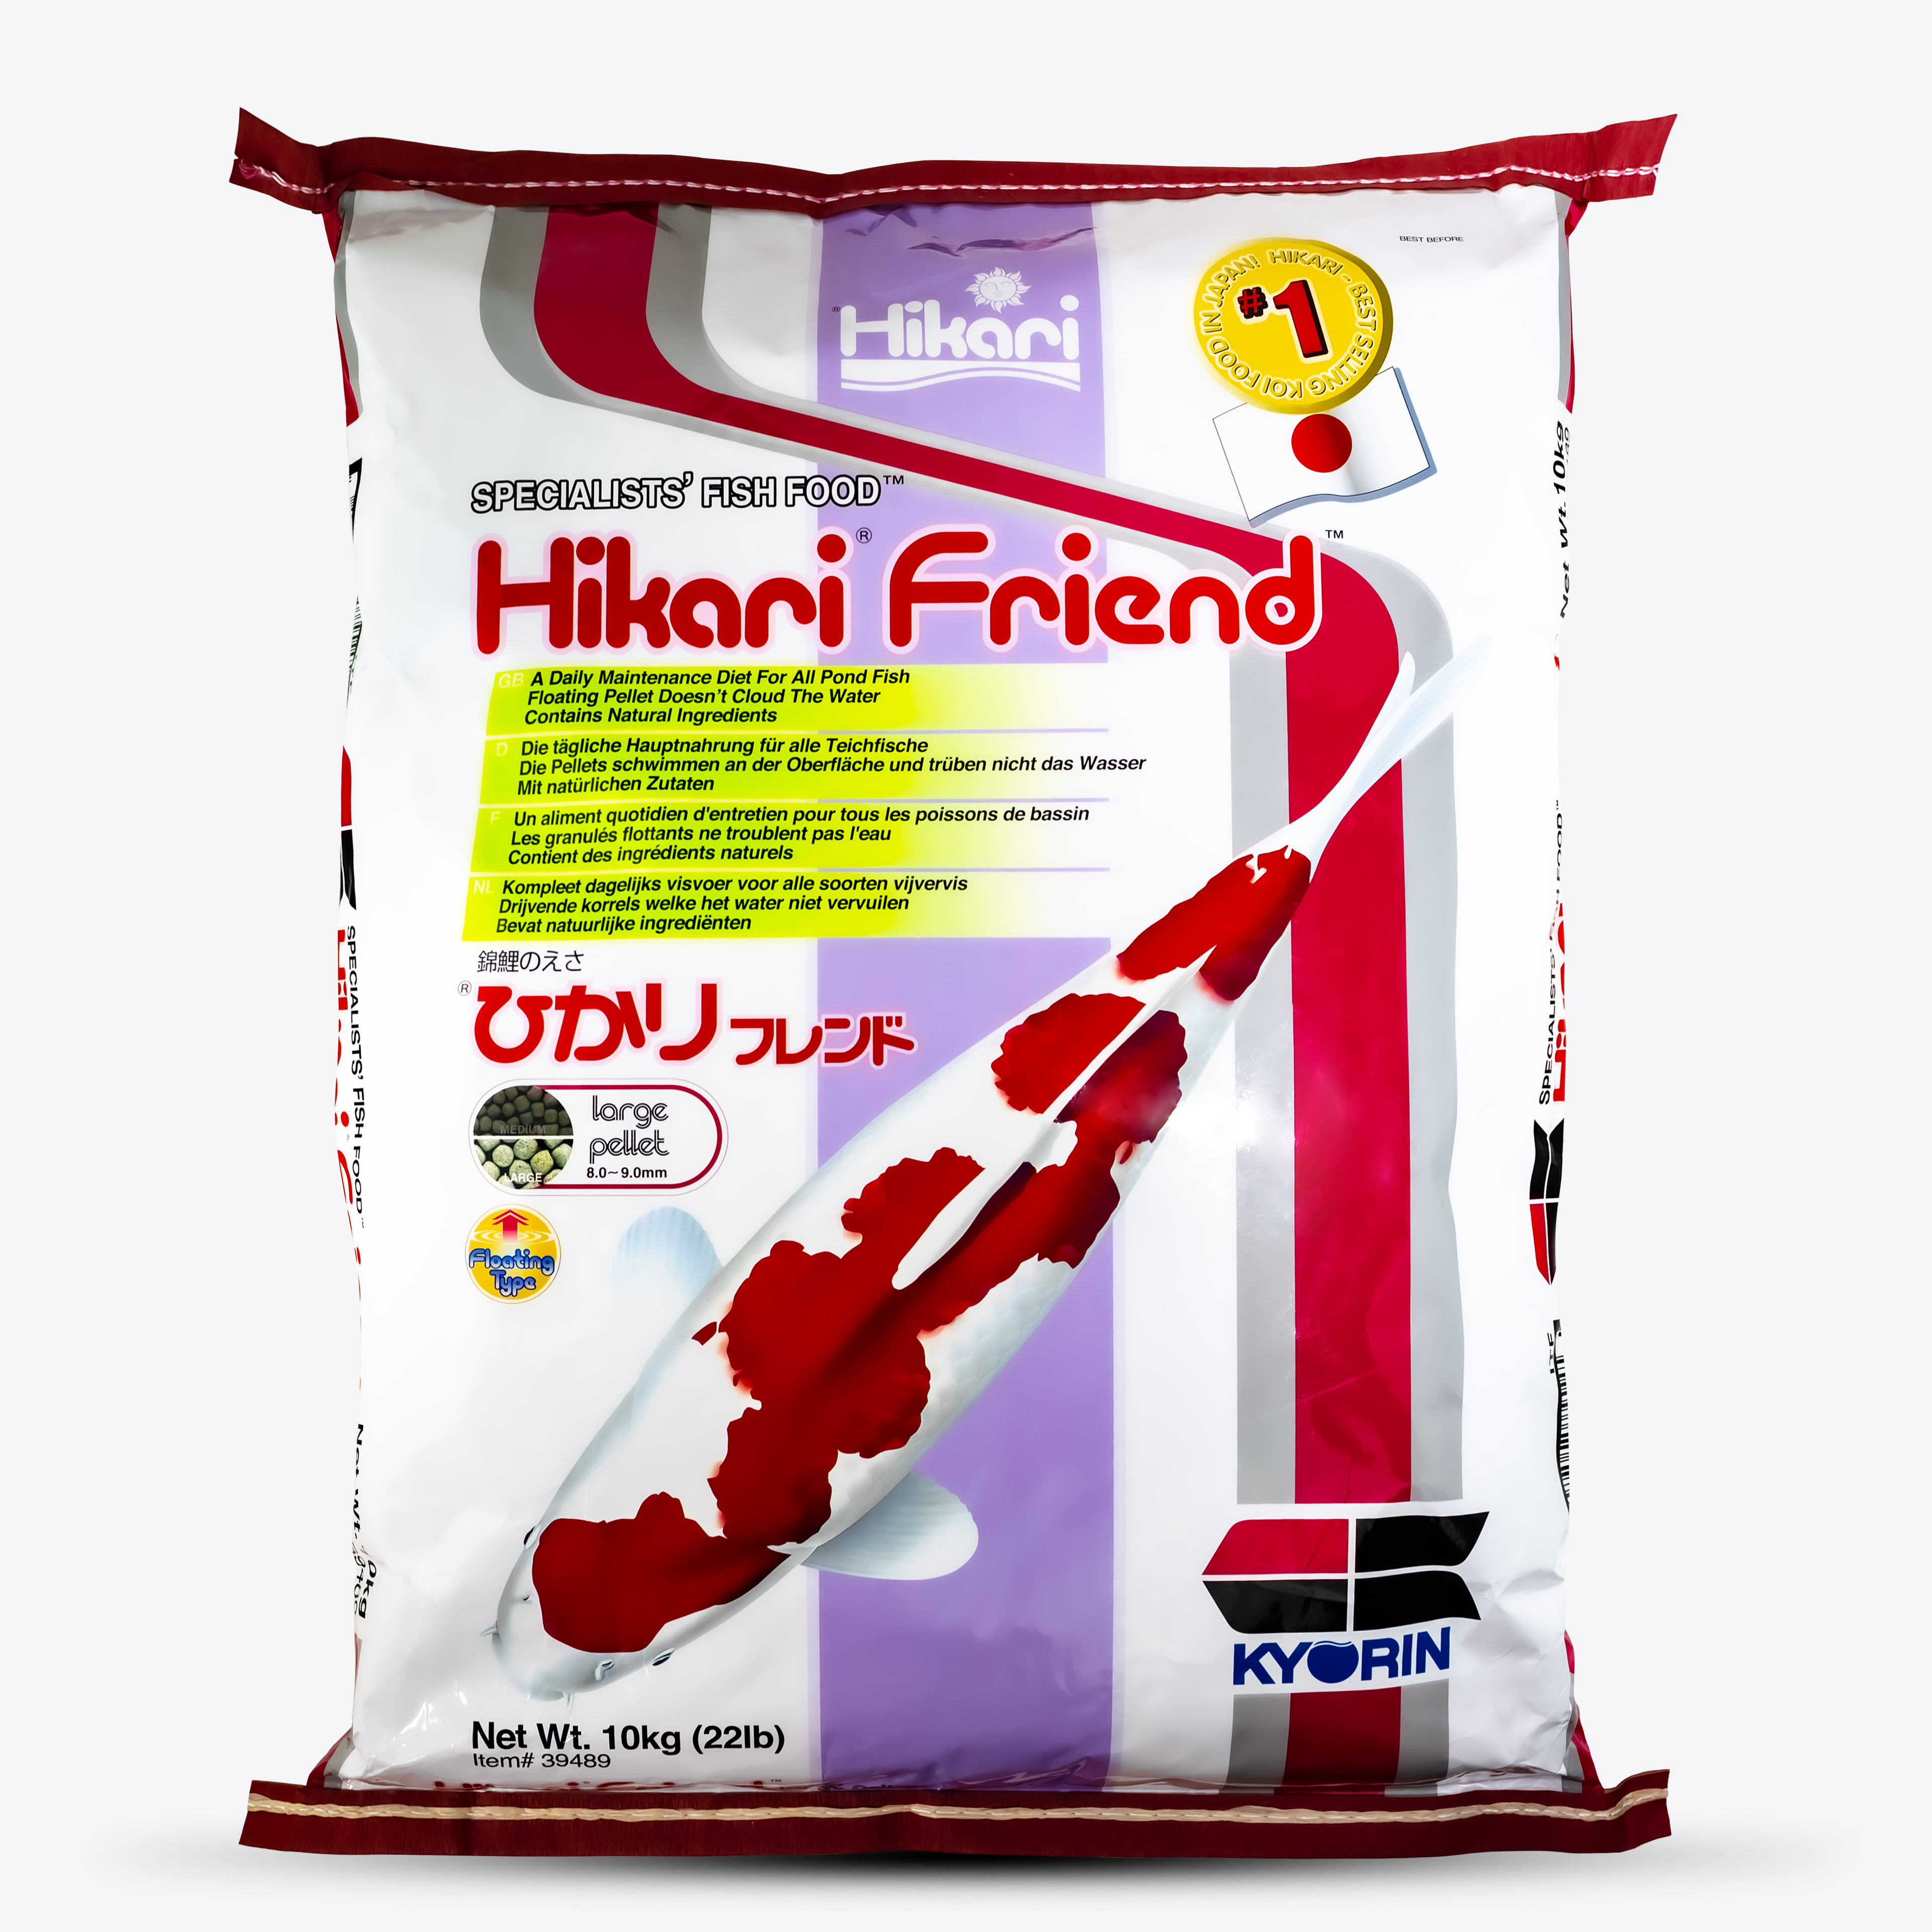 Hikari Friend Large Koifutter